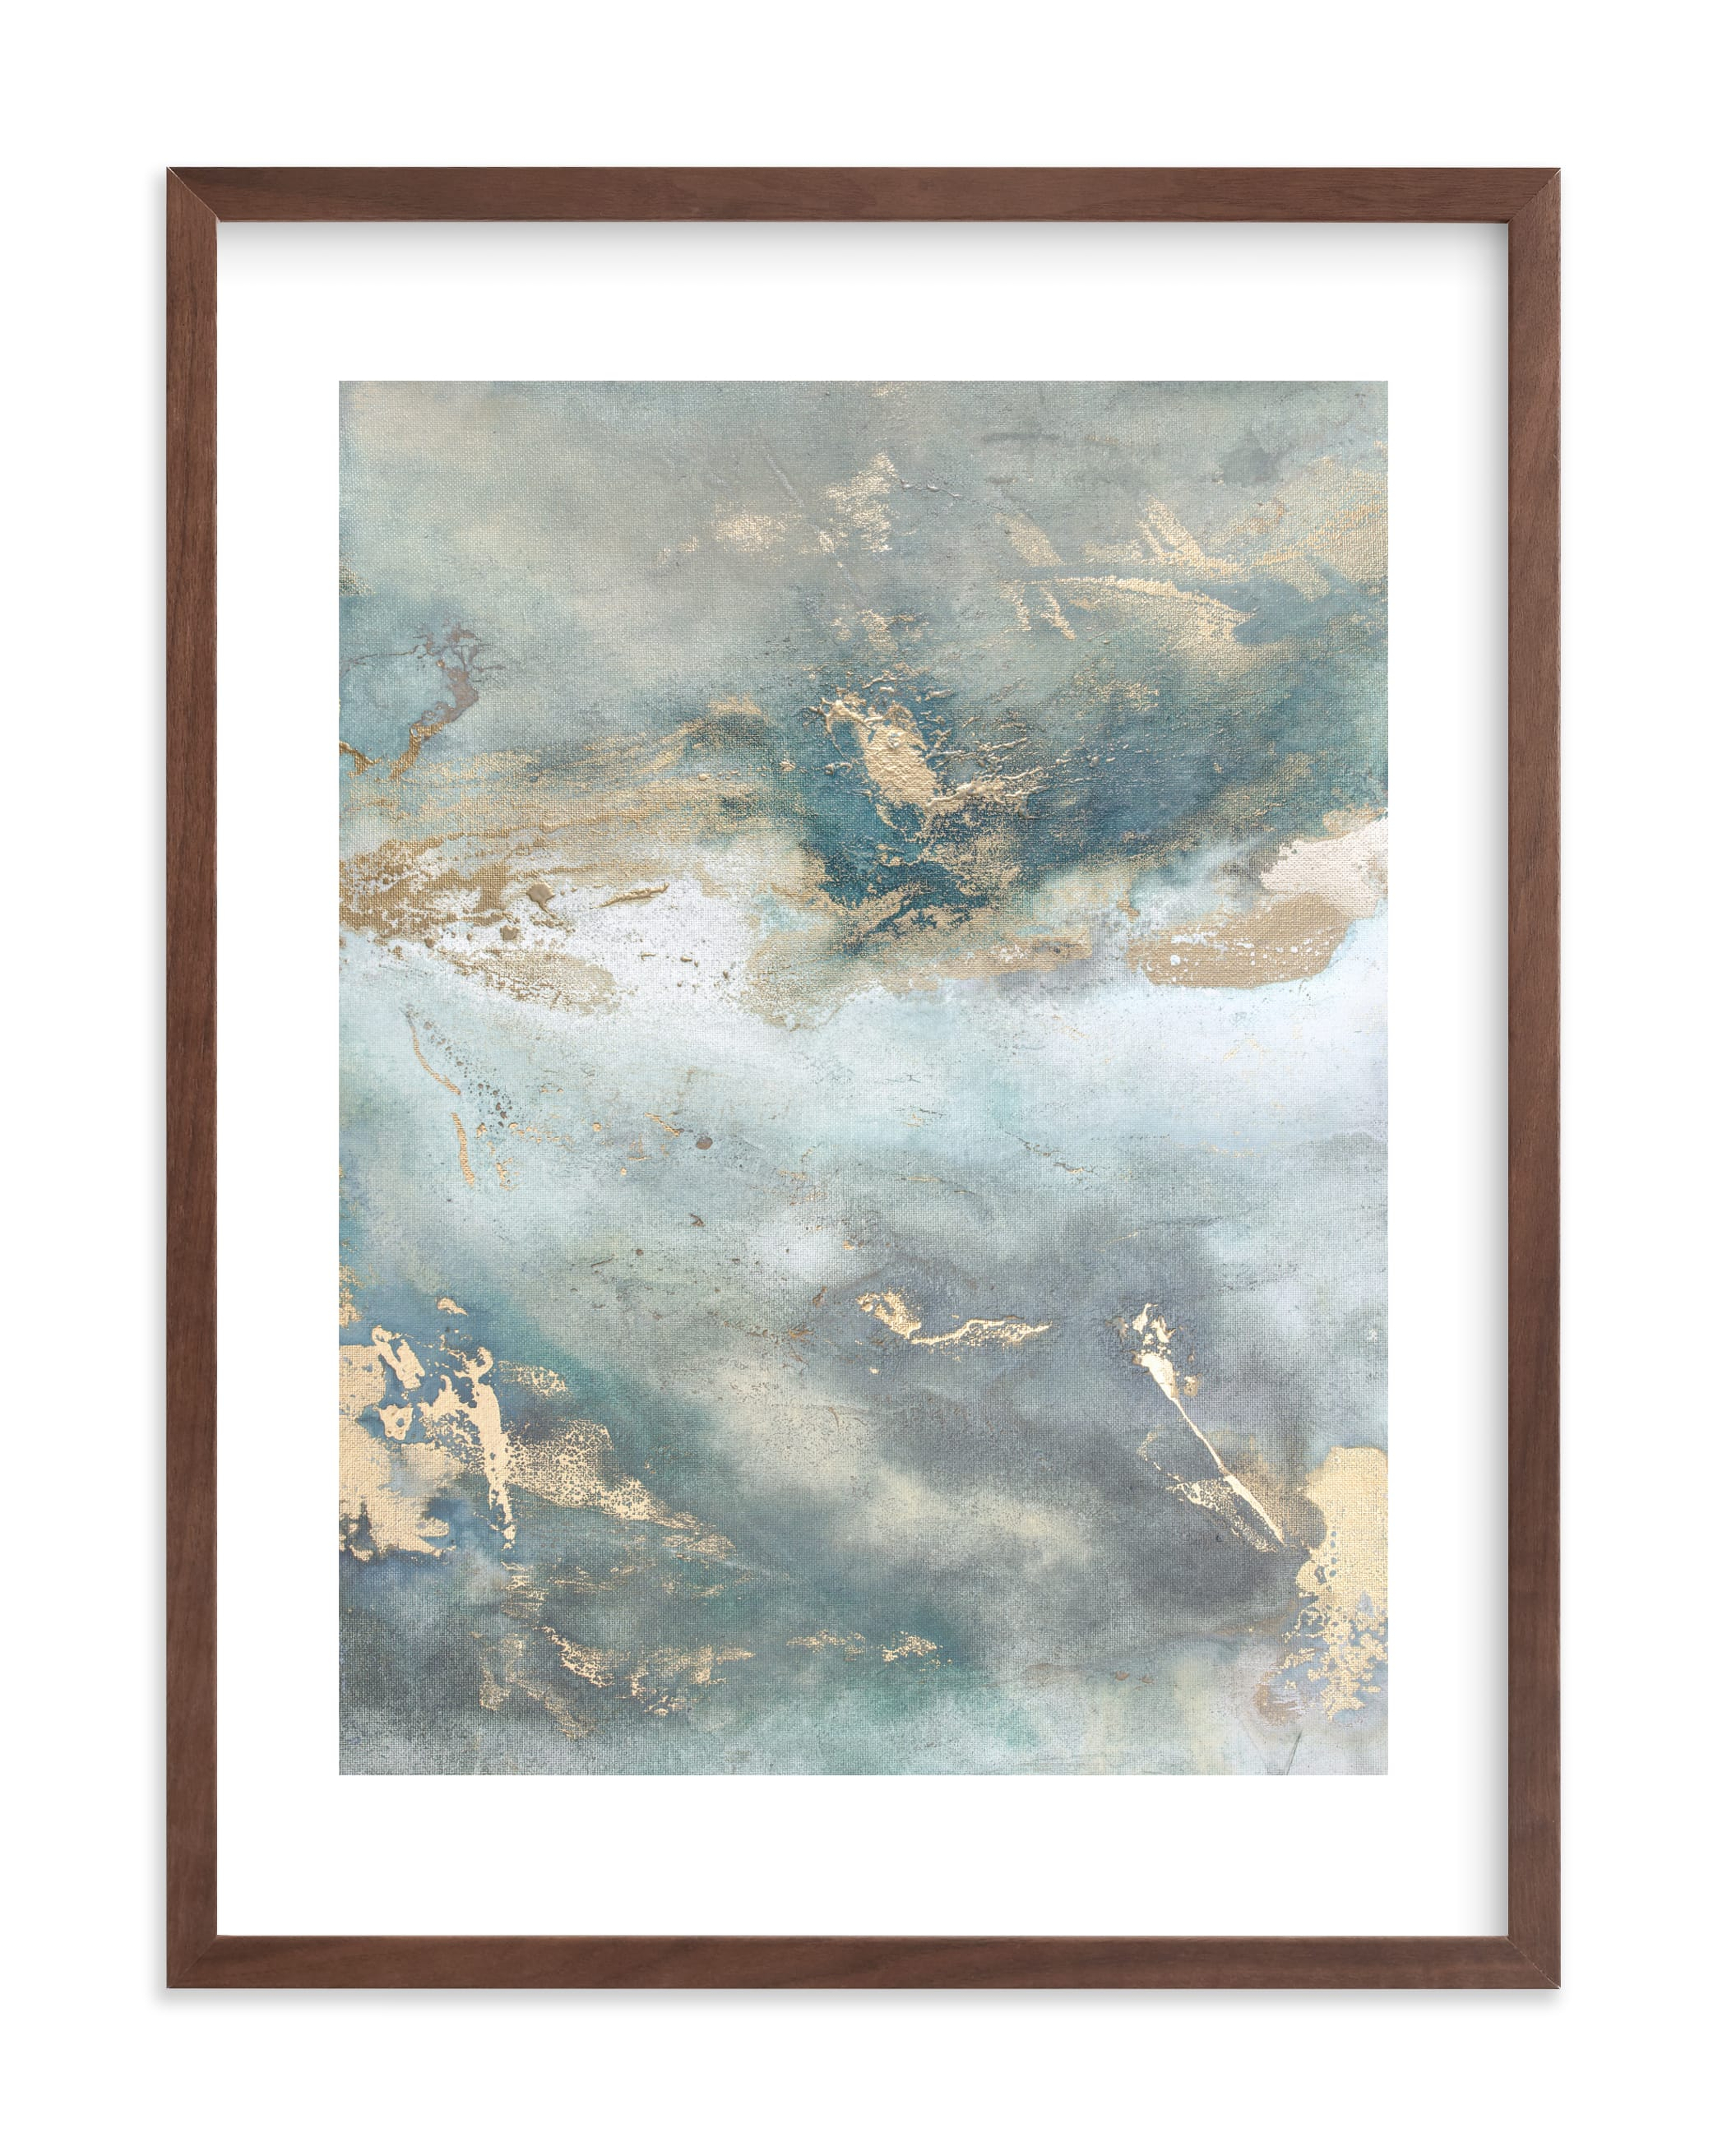 Luminous Smoke No. 2 Art Print - 18 x 24 - Walnut Wood Frame - White Border - Minted